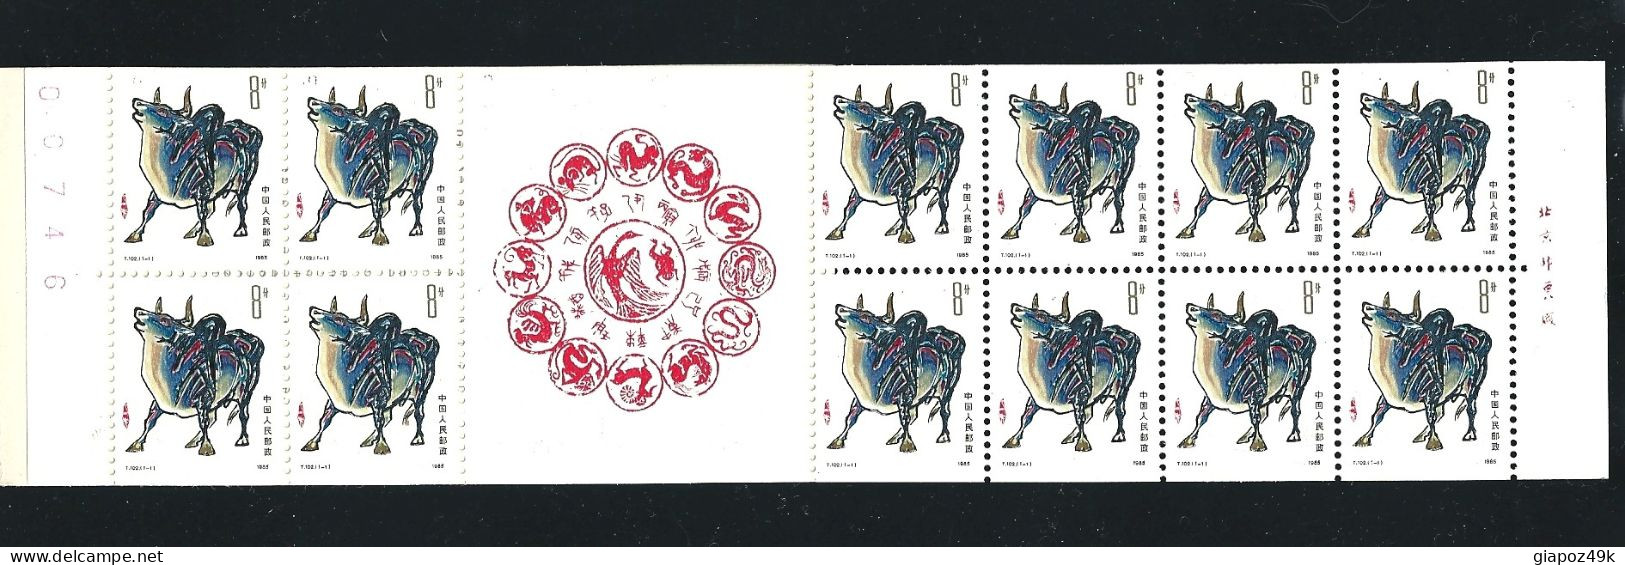 ● CINA 1985 ֍ Nuovo Anno ● Bue ️֍ Carnet Con N. 1988 ● Serie Completa ● Cat. ? € ️ ● Lotto N. 800/n ️● - Blocks & Sheetlets